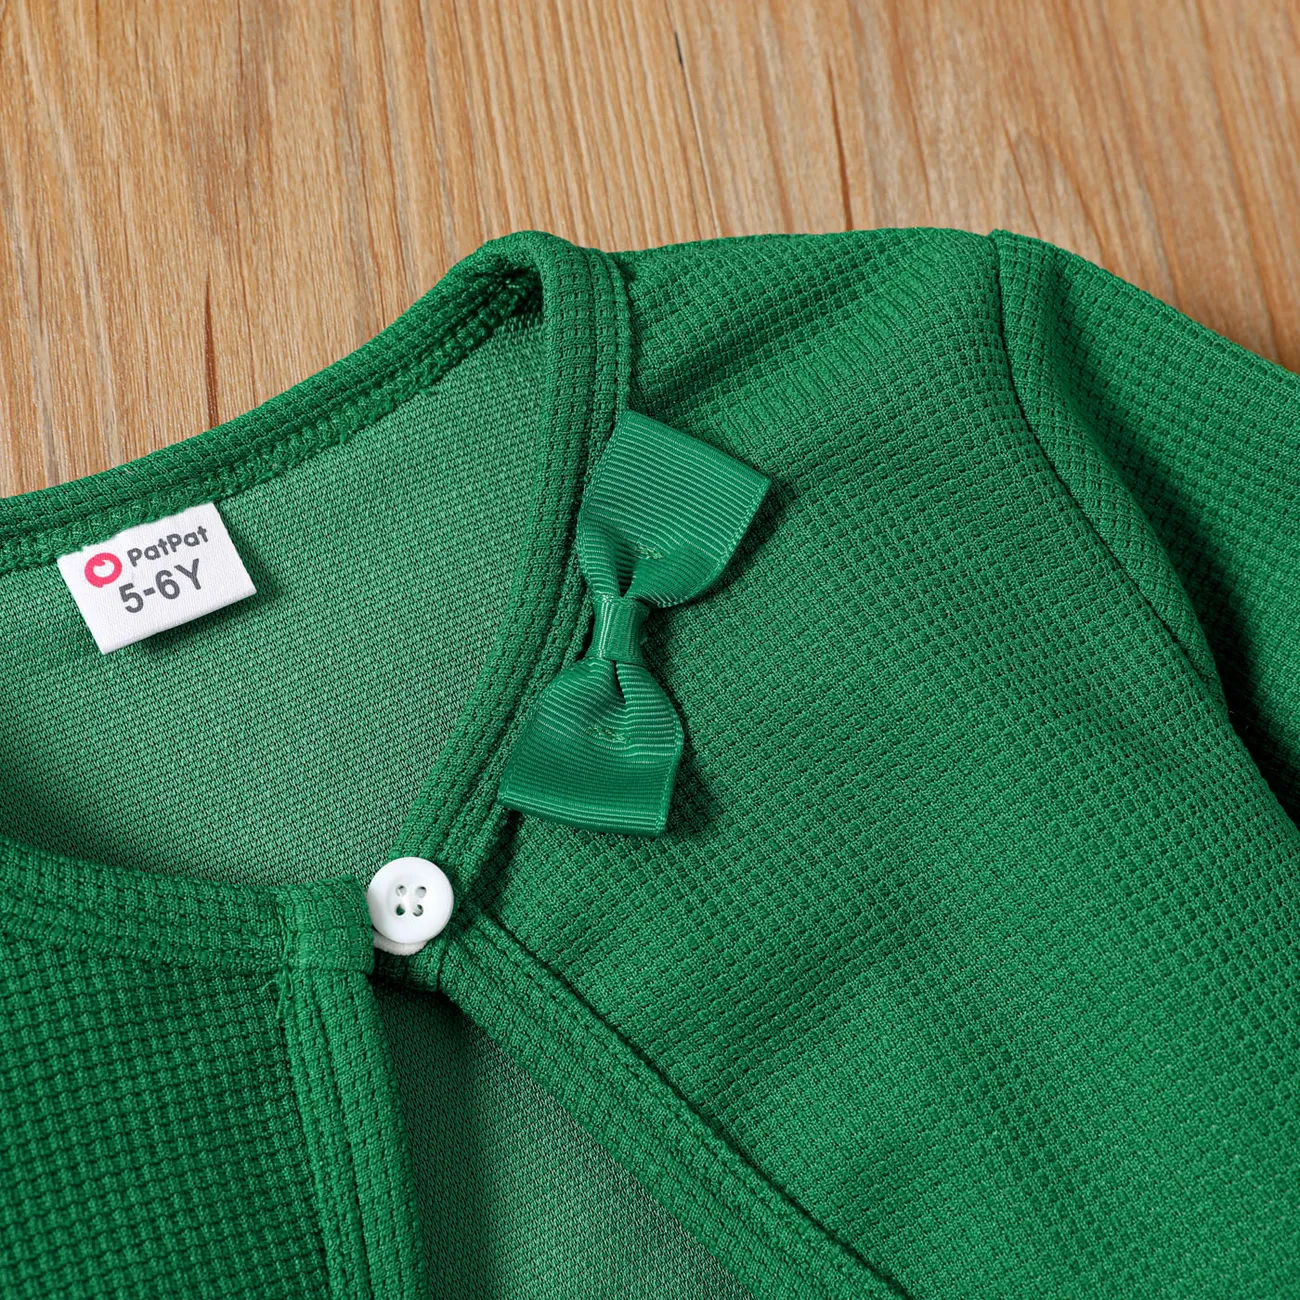 2pcs Kid Girl Floral Print Sleeveless Dress and Bowknot Design Cardigan Set Green big image 1